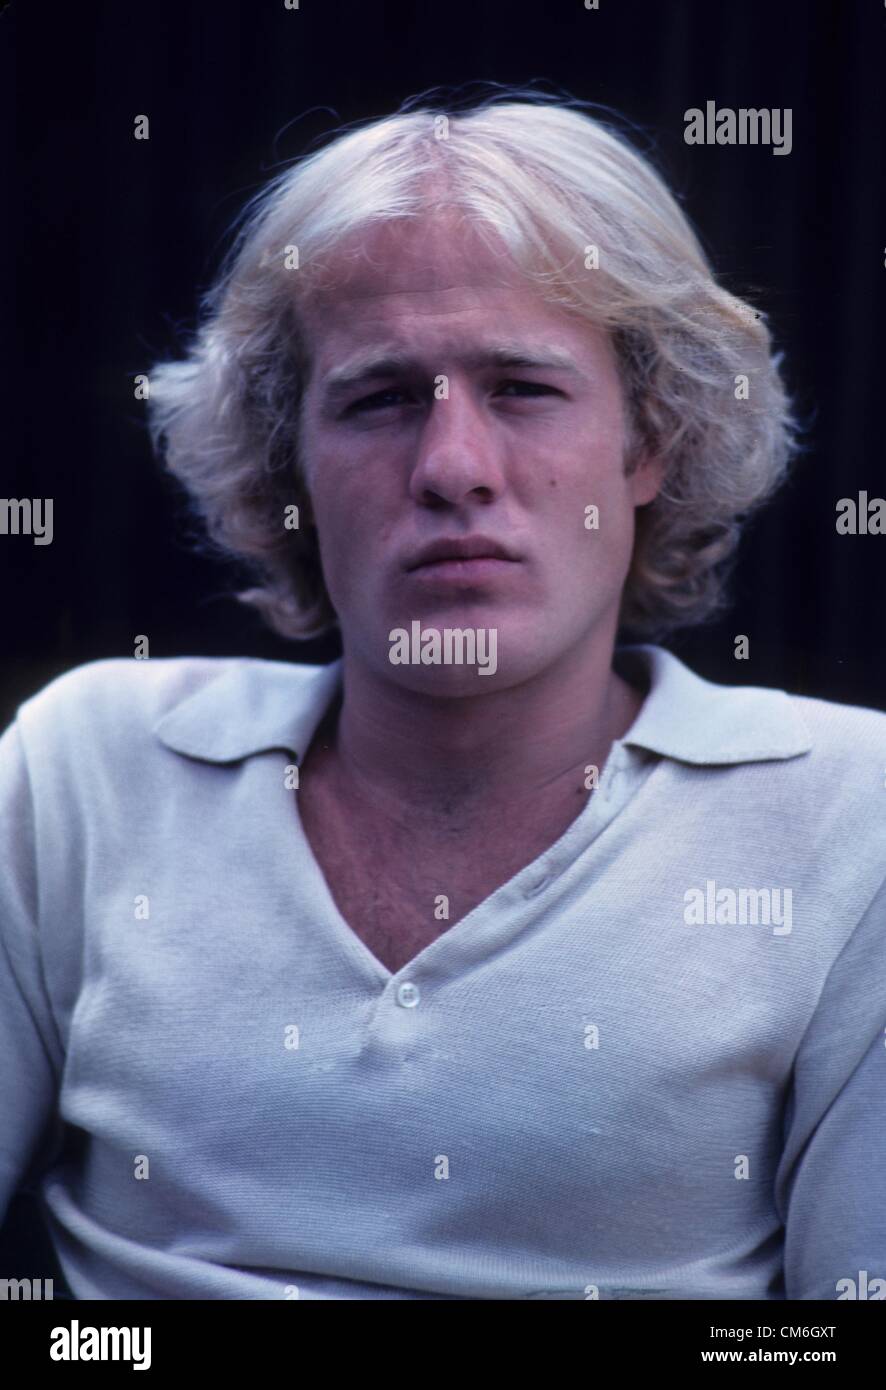 GREGG HENRY 1977.g4374.(Credit Image: © John Partipilo/Globe Photos/ZUMAPRESS.com) Stock Photo